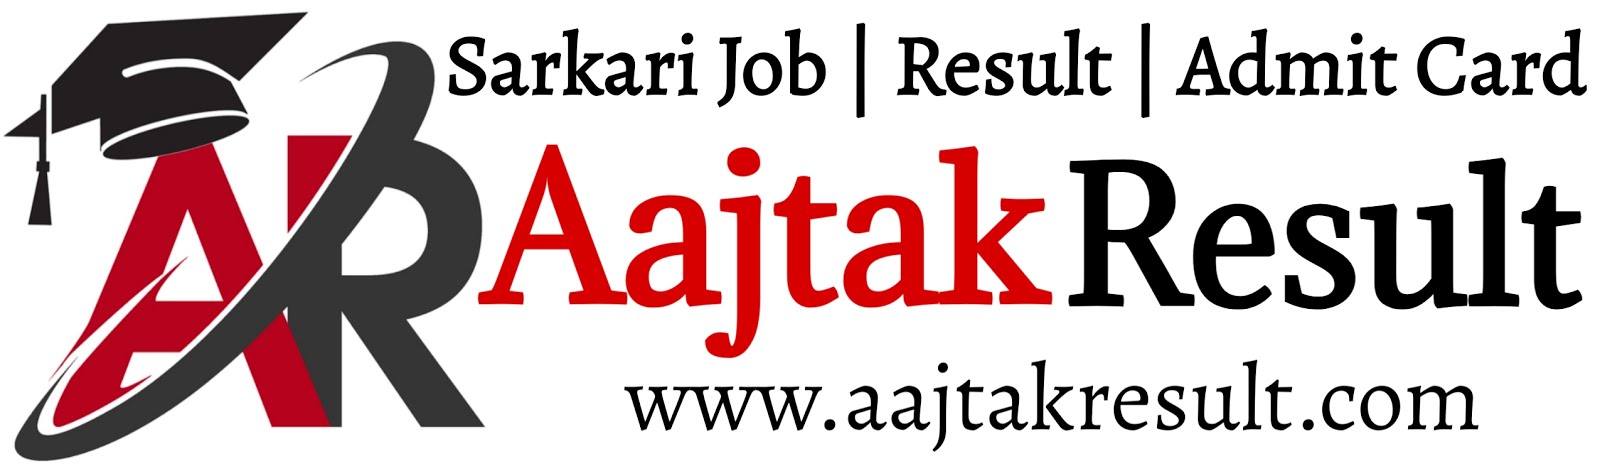 Aajtak Result : Free Job Alert and Sarkari Result of Government Jobs Exam